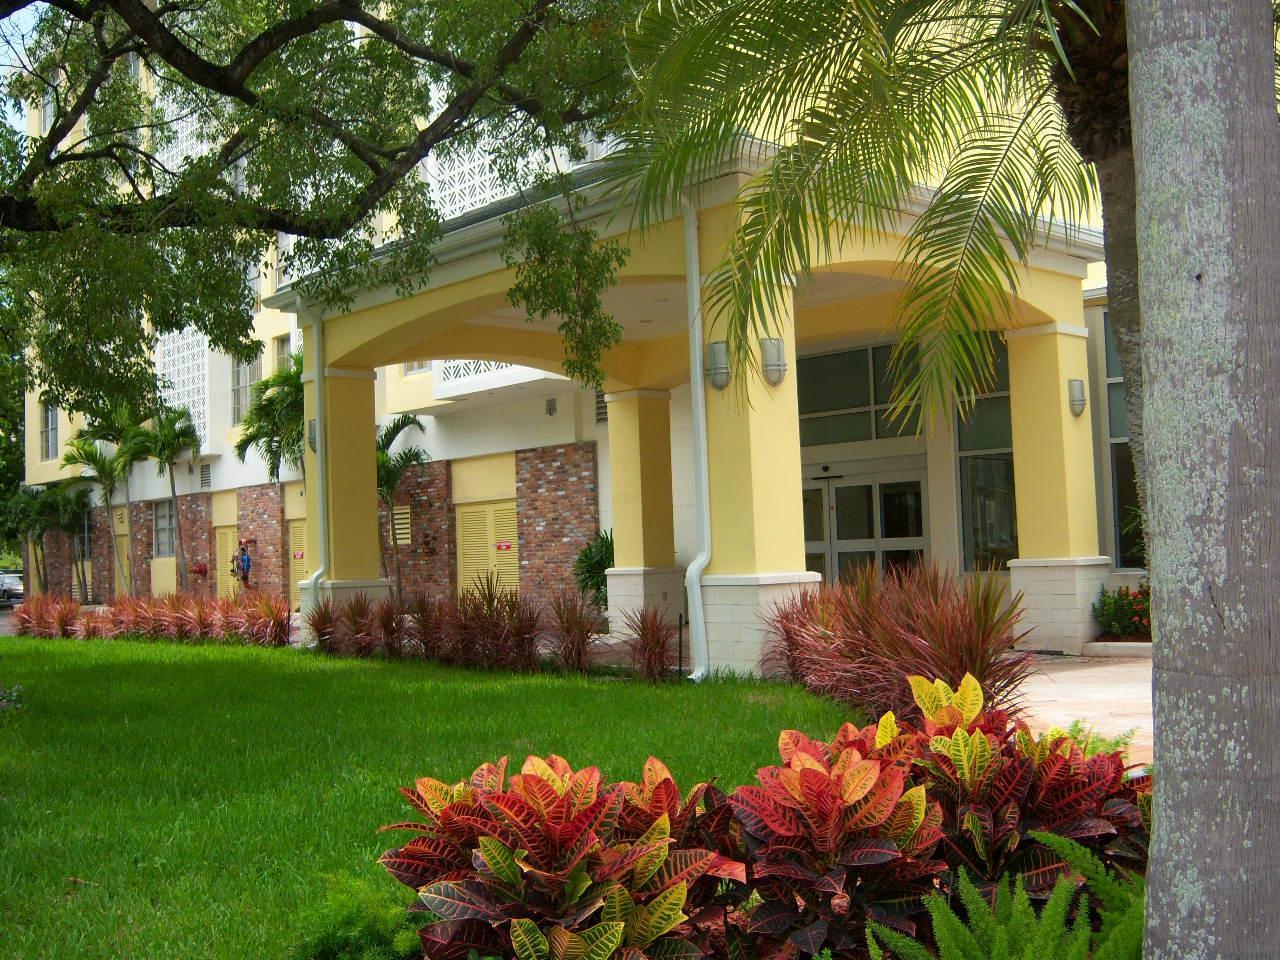 Photo of Courtyard Miami Coral Gables, Coral Gables, FL